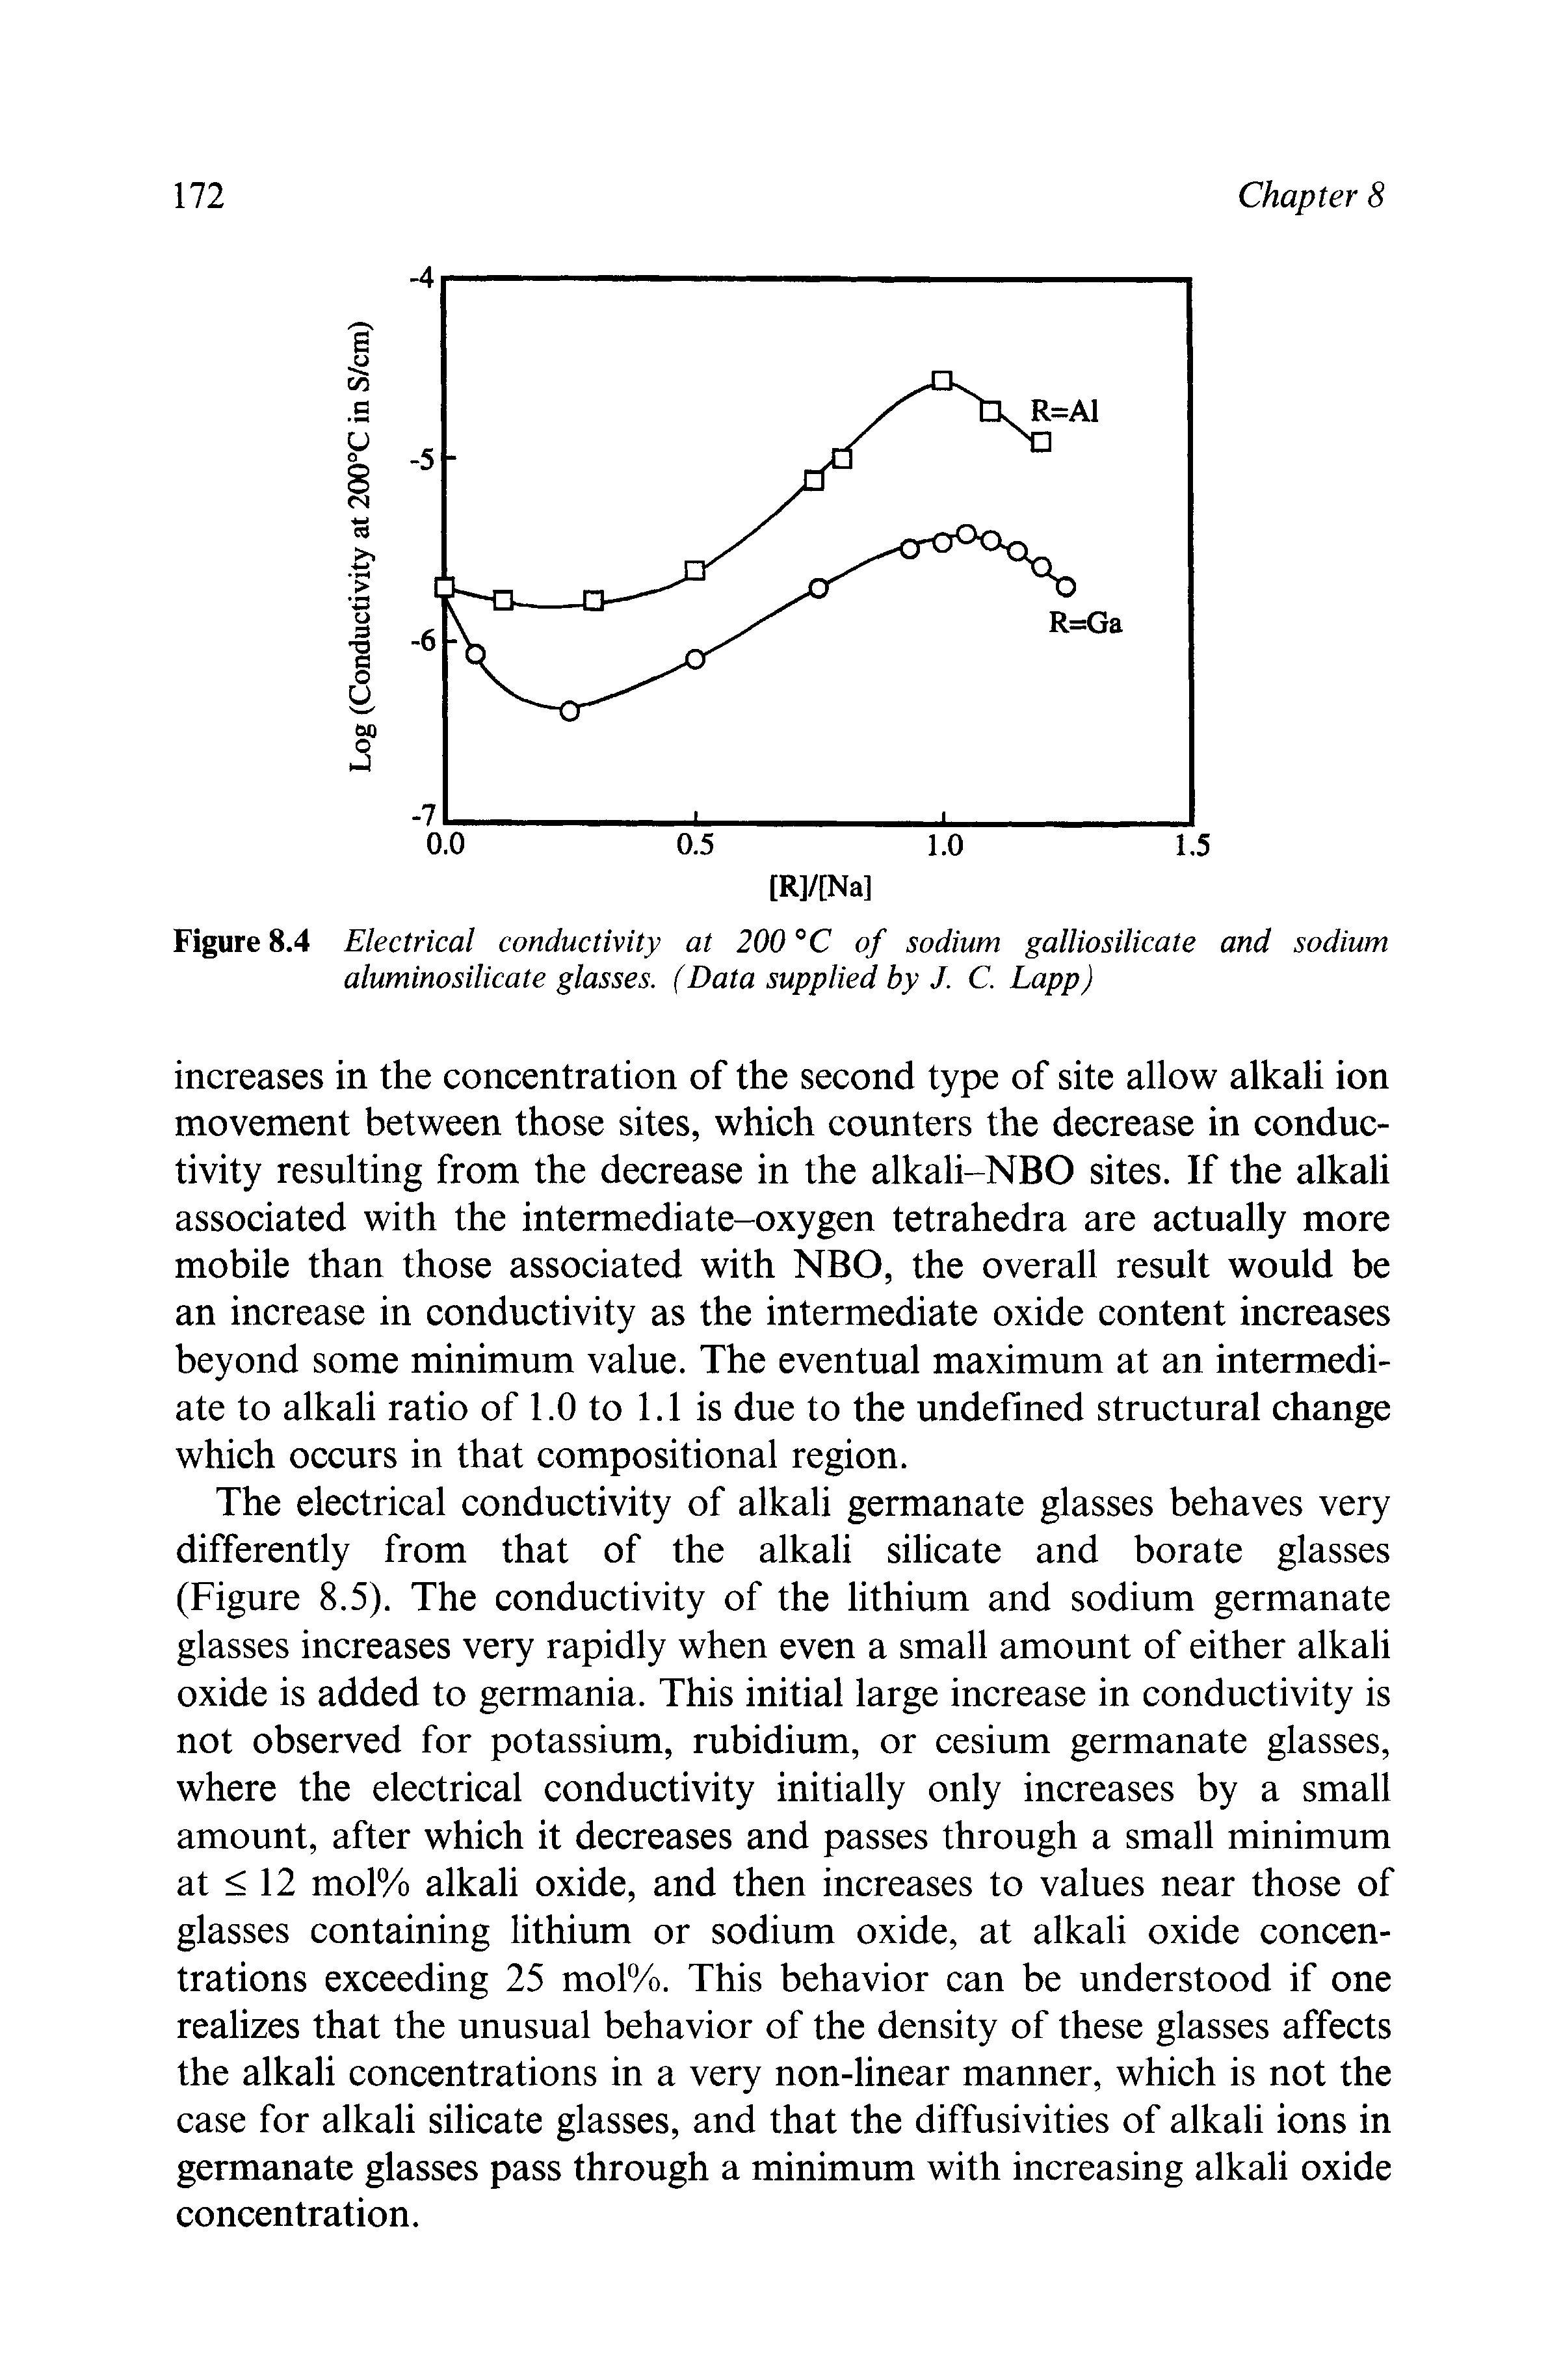 Figure 8.4 Electrical conductivity at 200 C of sodium galliosilicate and sodium aluminosilicate glasses. (Data supplied by J. C. Lapp)...